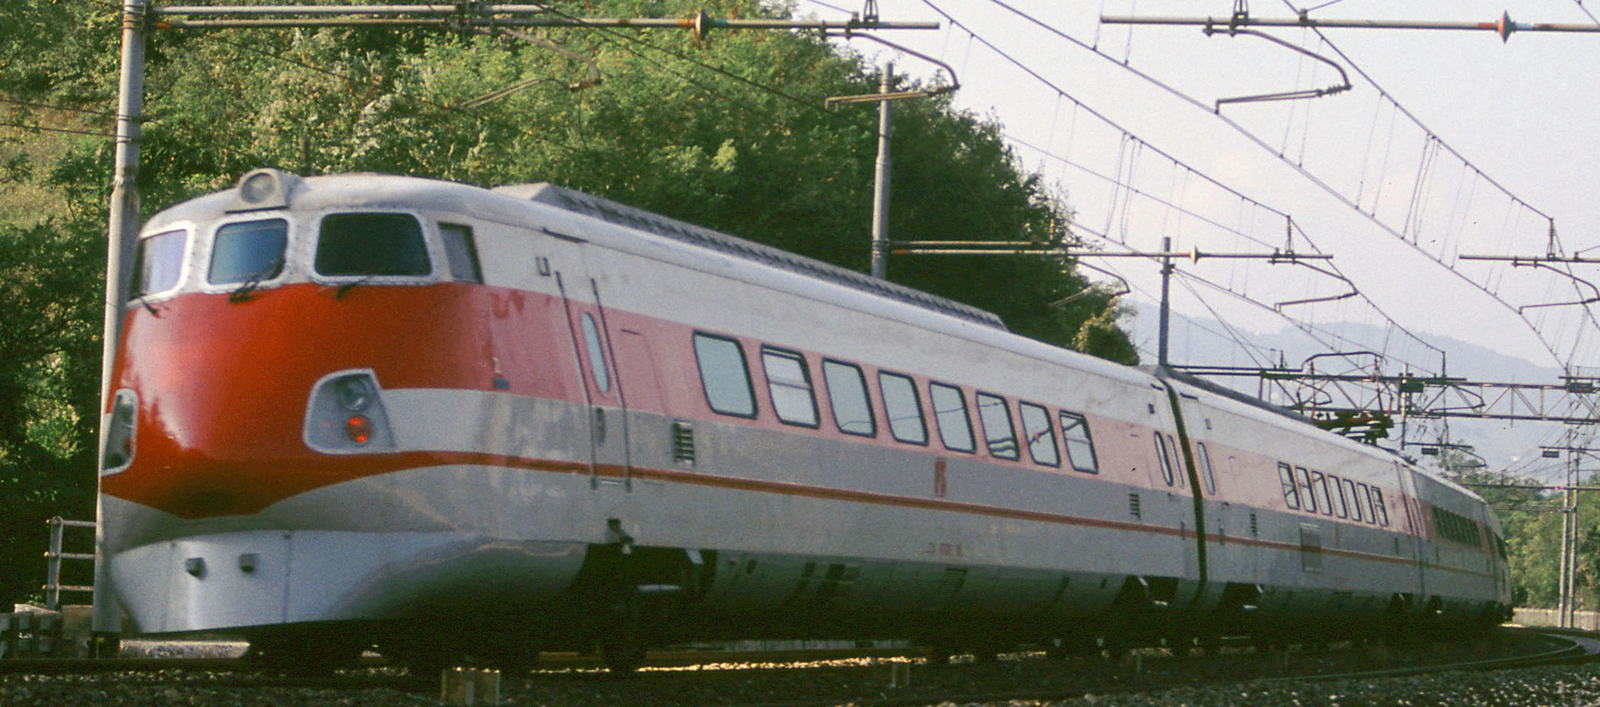 An ETR 450 in 1990 towards Monzuno, Bolognese Apennines